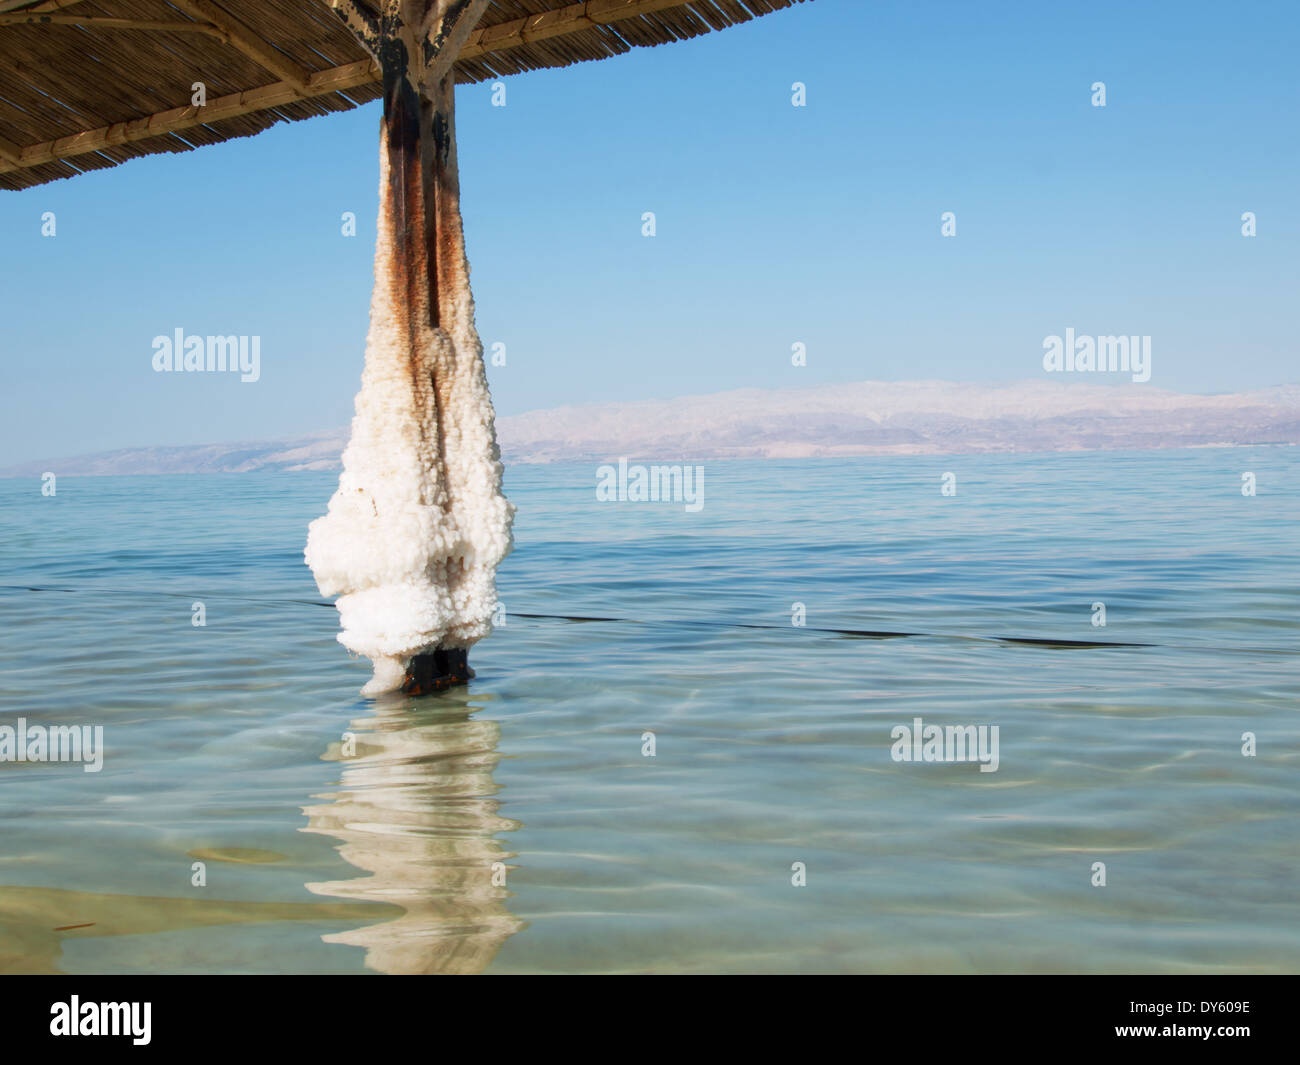 spa resort of the Dead Sea at Ein Gedi, Israel. Stock Photo